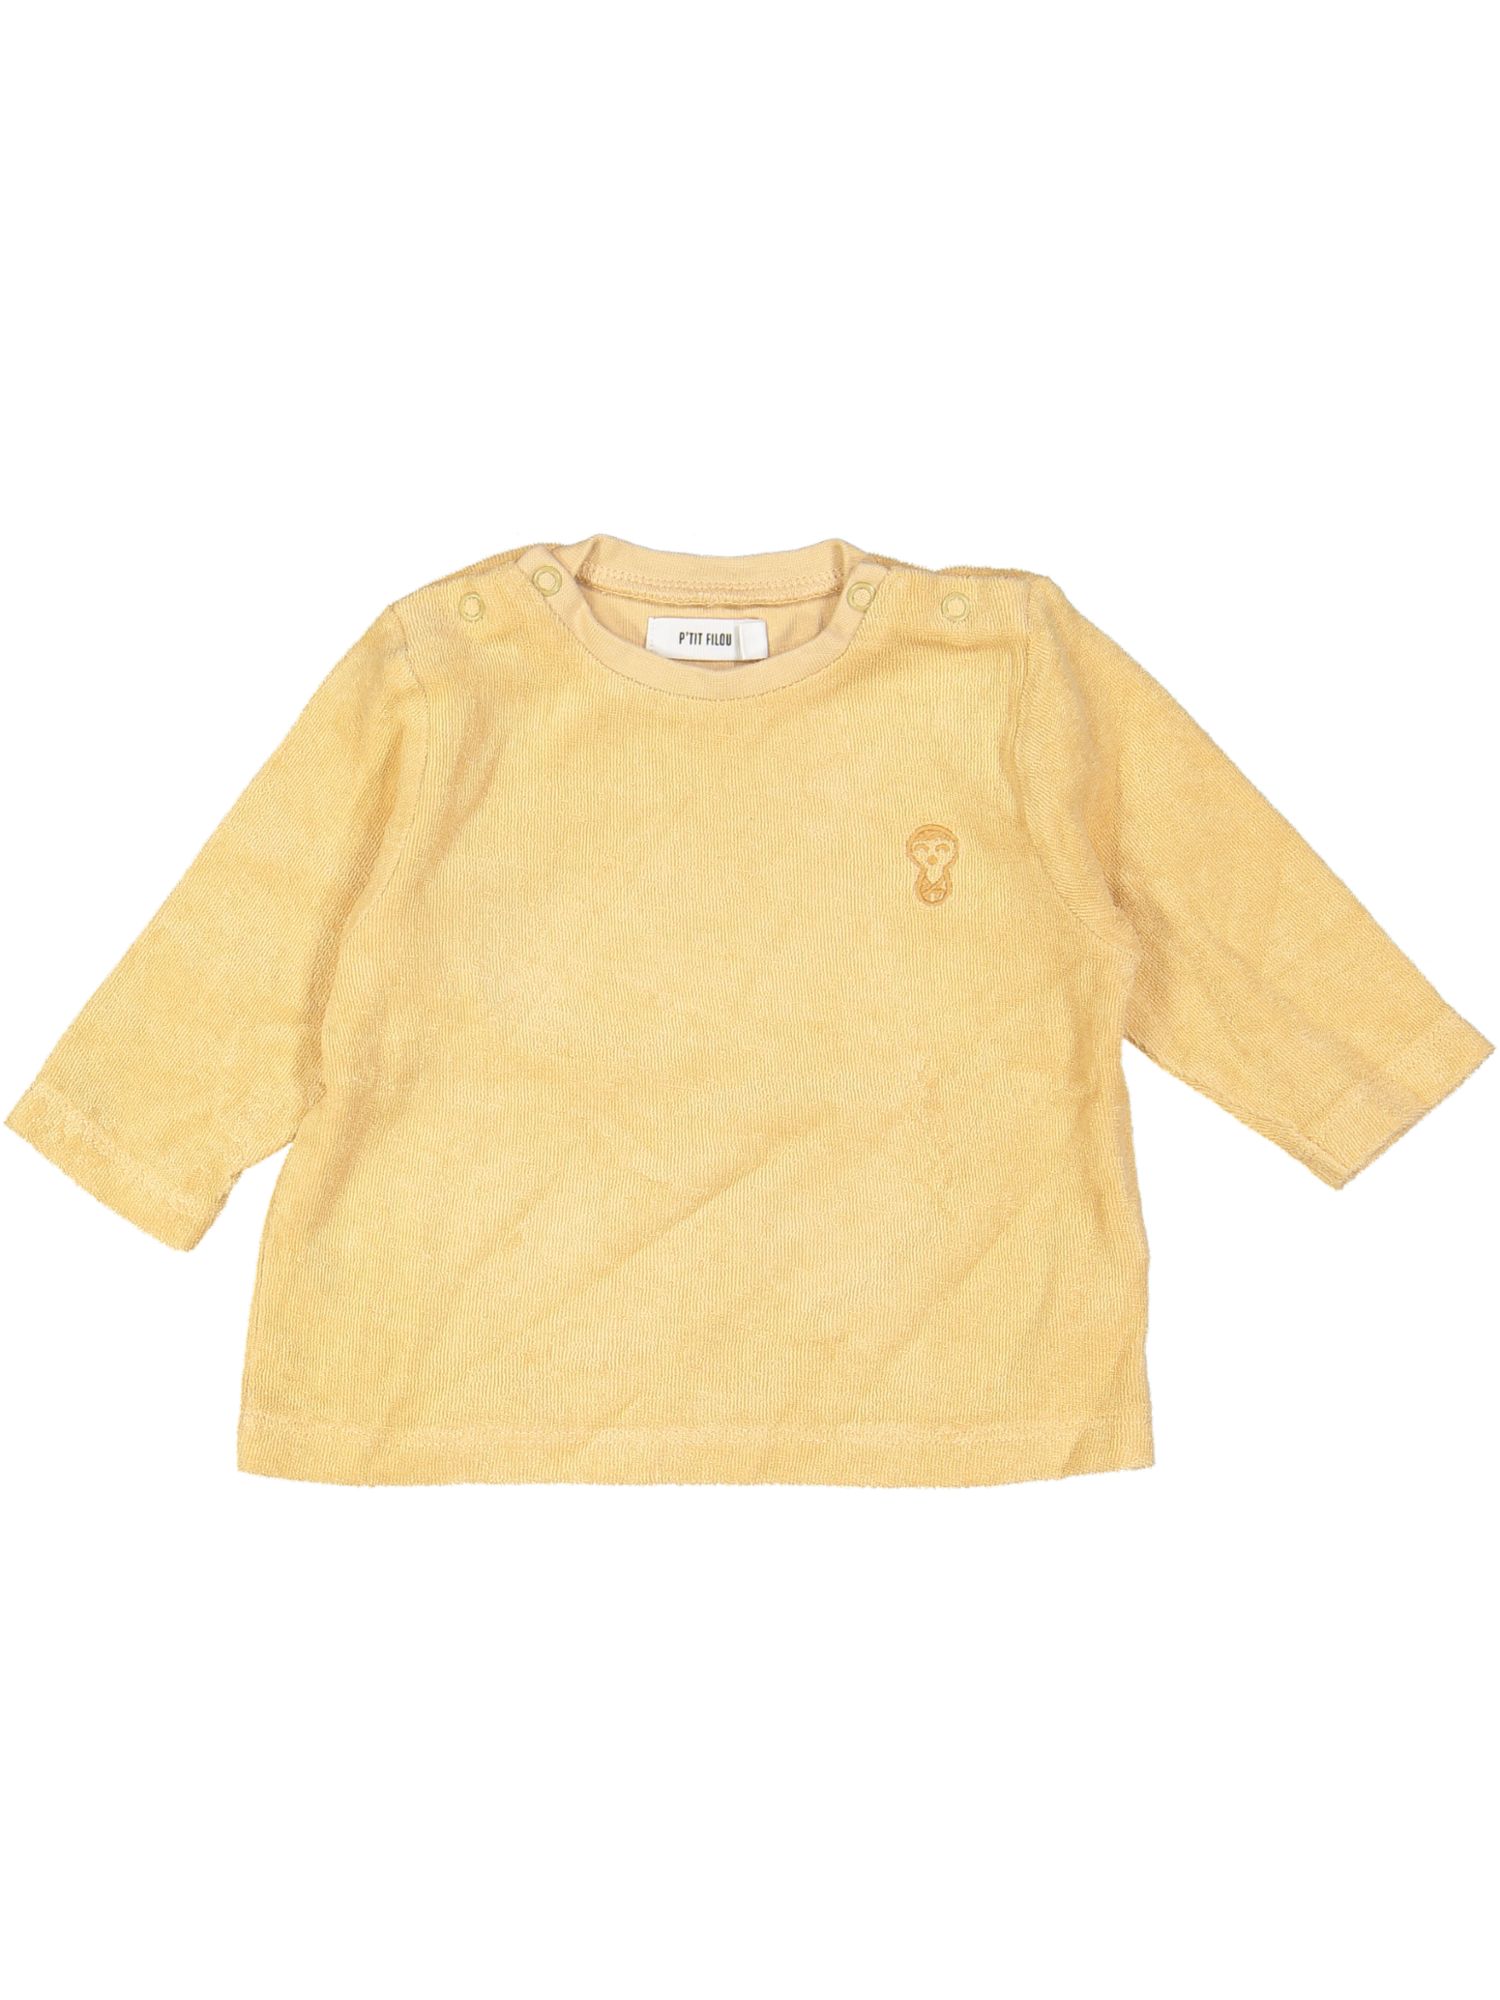 sweater geel spons 03m .